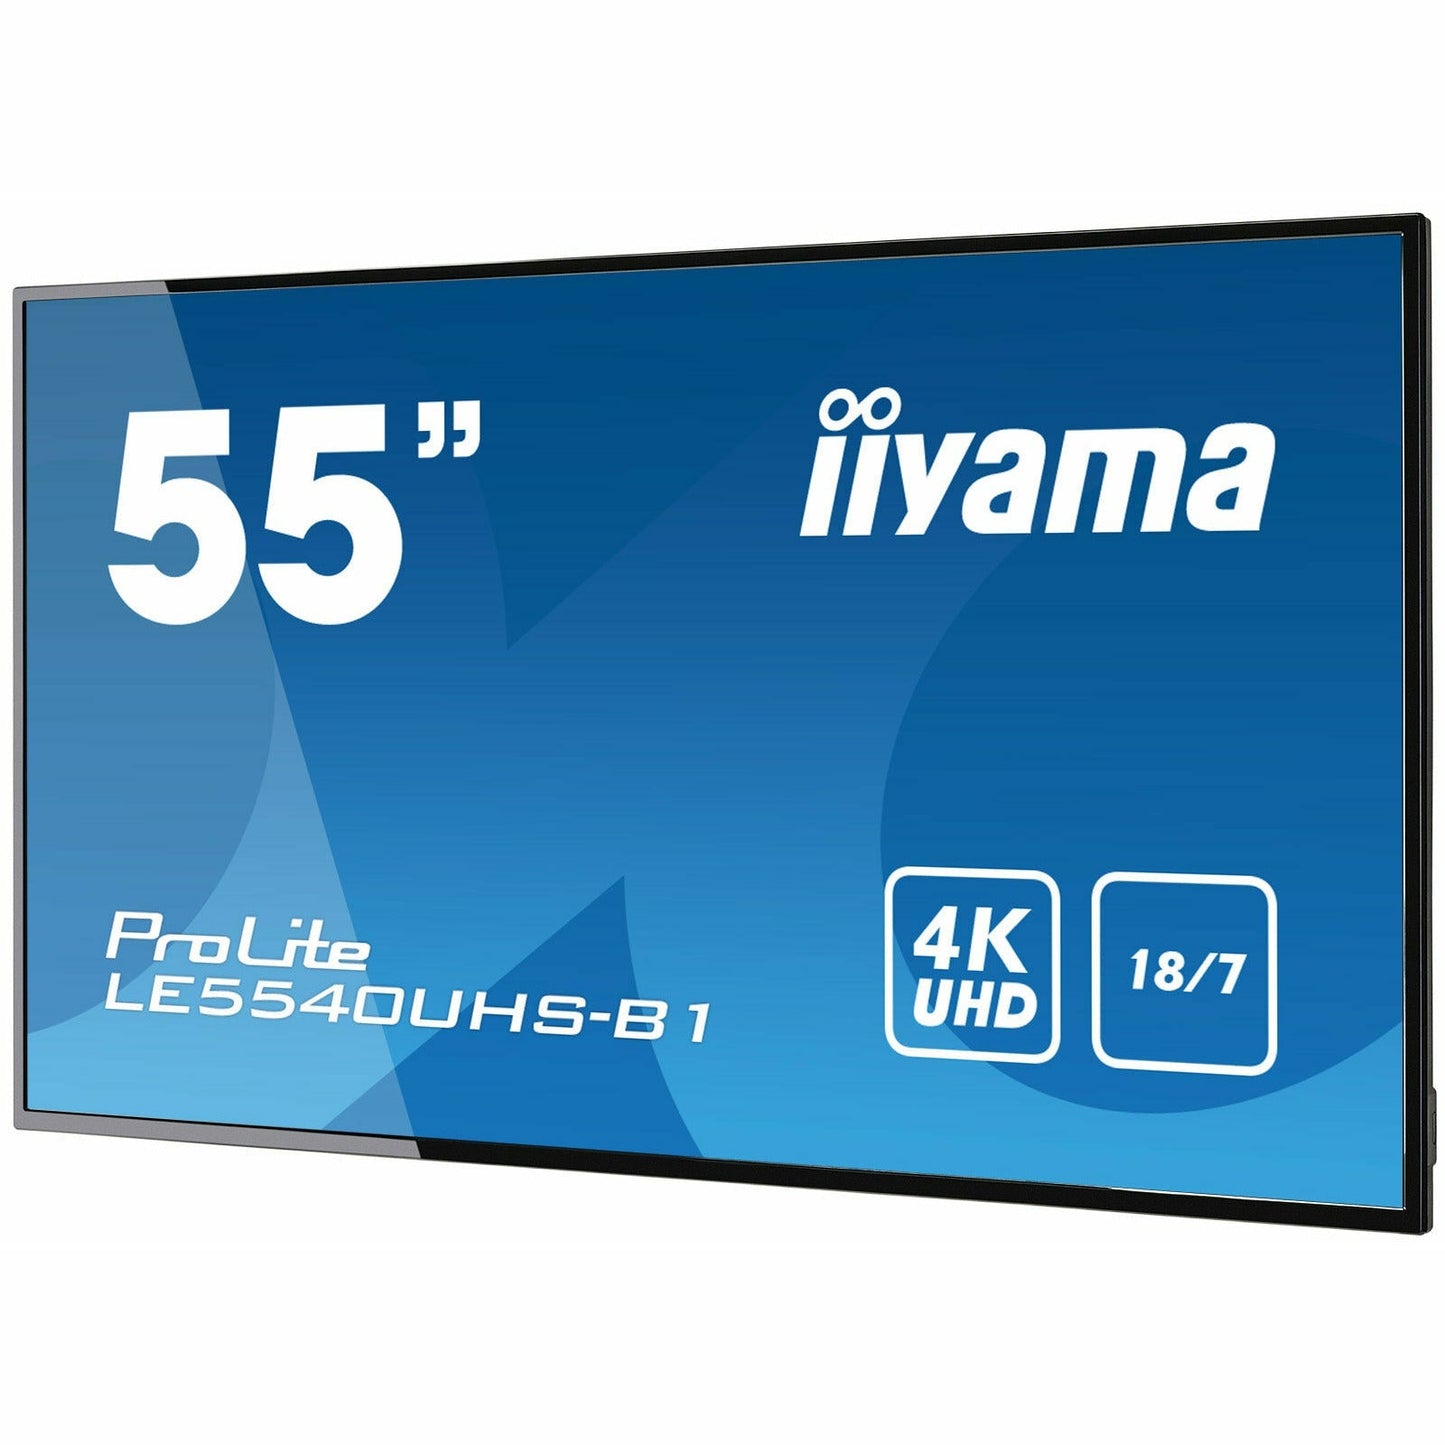 Steel Blue iiyama ProLite LE5540UHS-B1 55" 4K UHD 18/7 Hours Operation Large Format Display